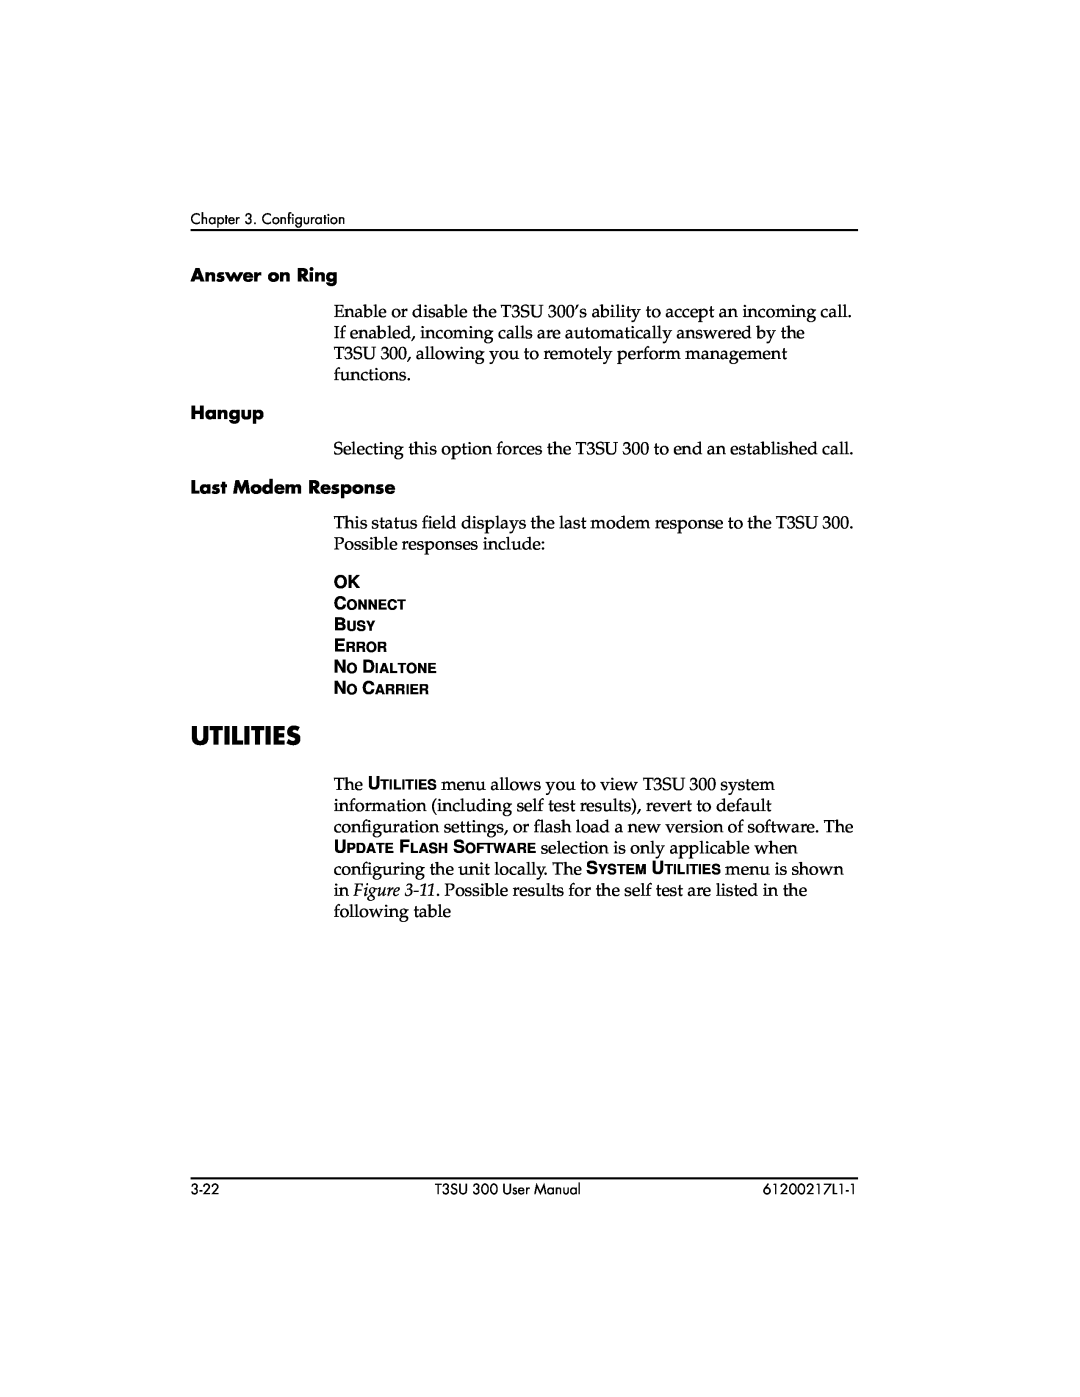 ADTRAN T3SU 300 user manual Utilities, Answer on Ring, Hangup, Last Modem Response 